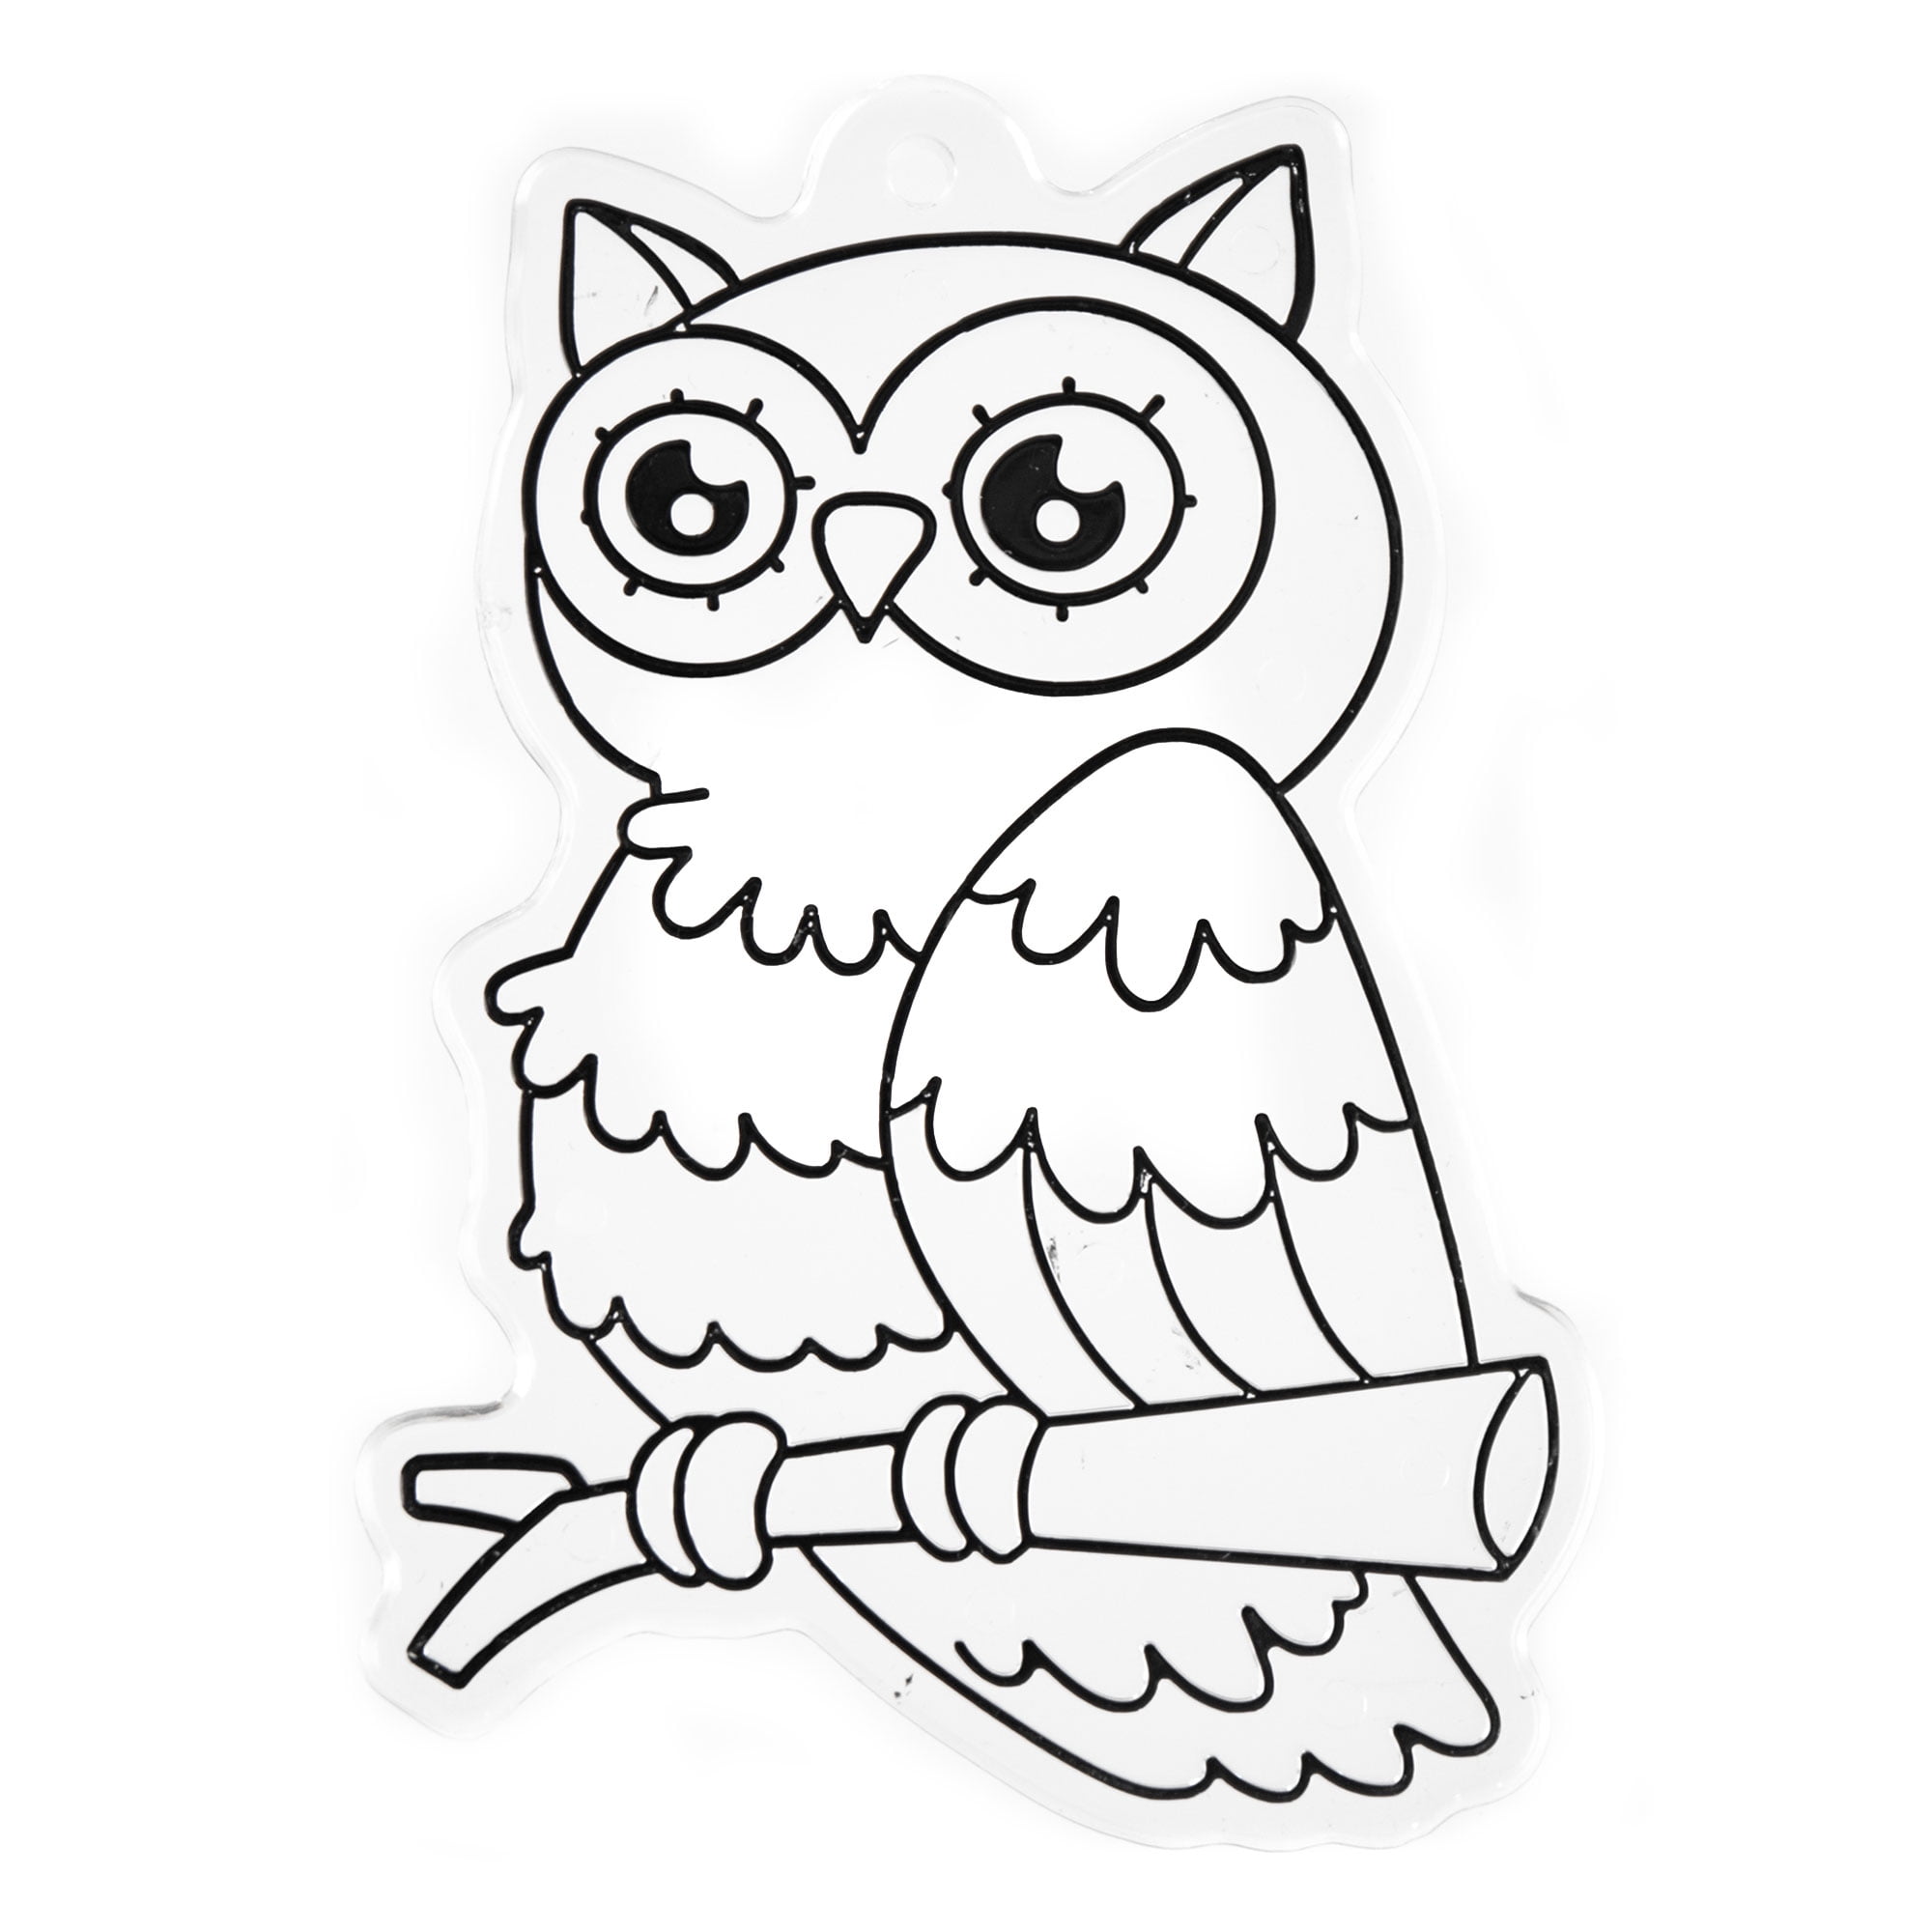 Crayola Paint your own Suncatcher Owl / birdSun Catcher Craft Kit NEW!  FUN!!